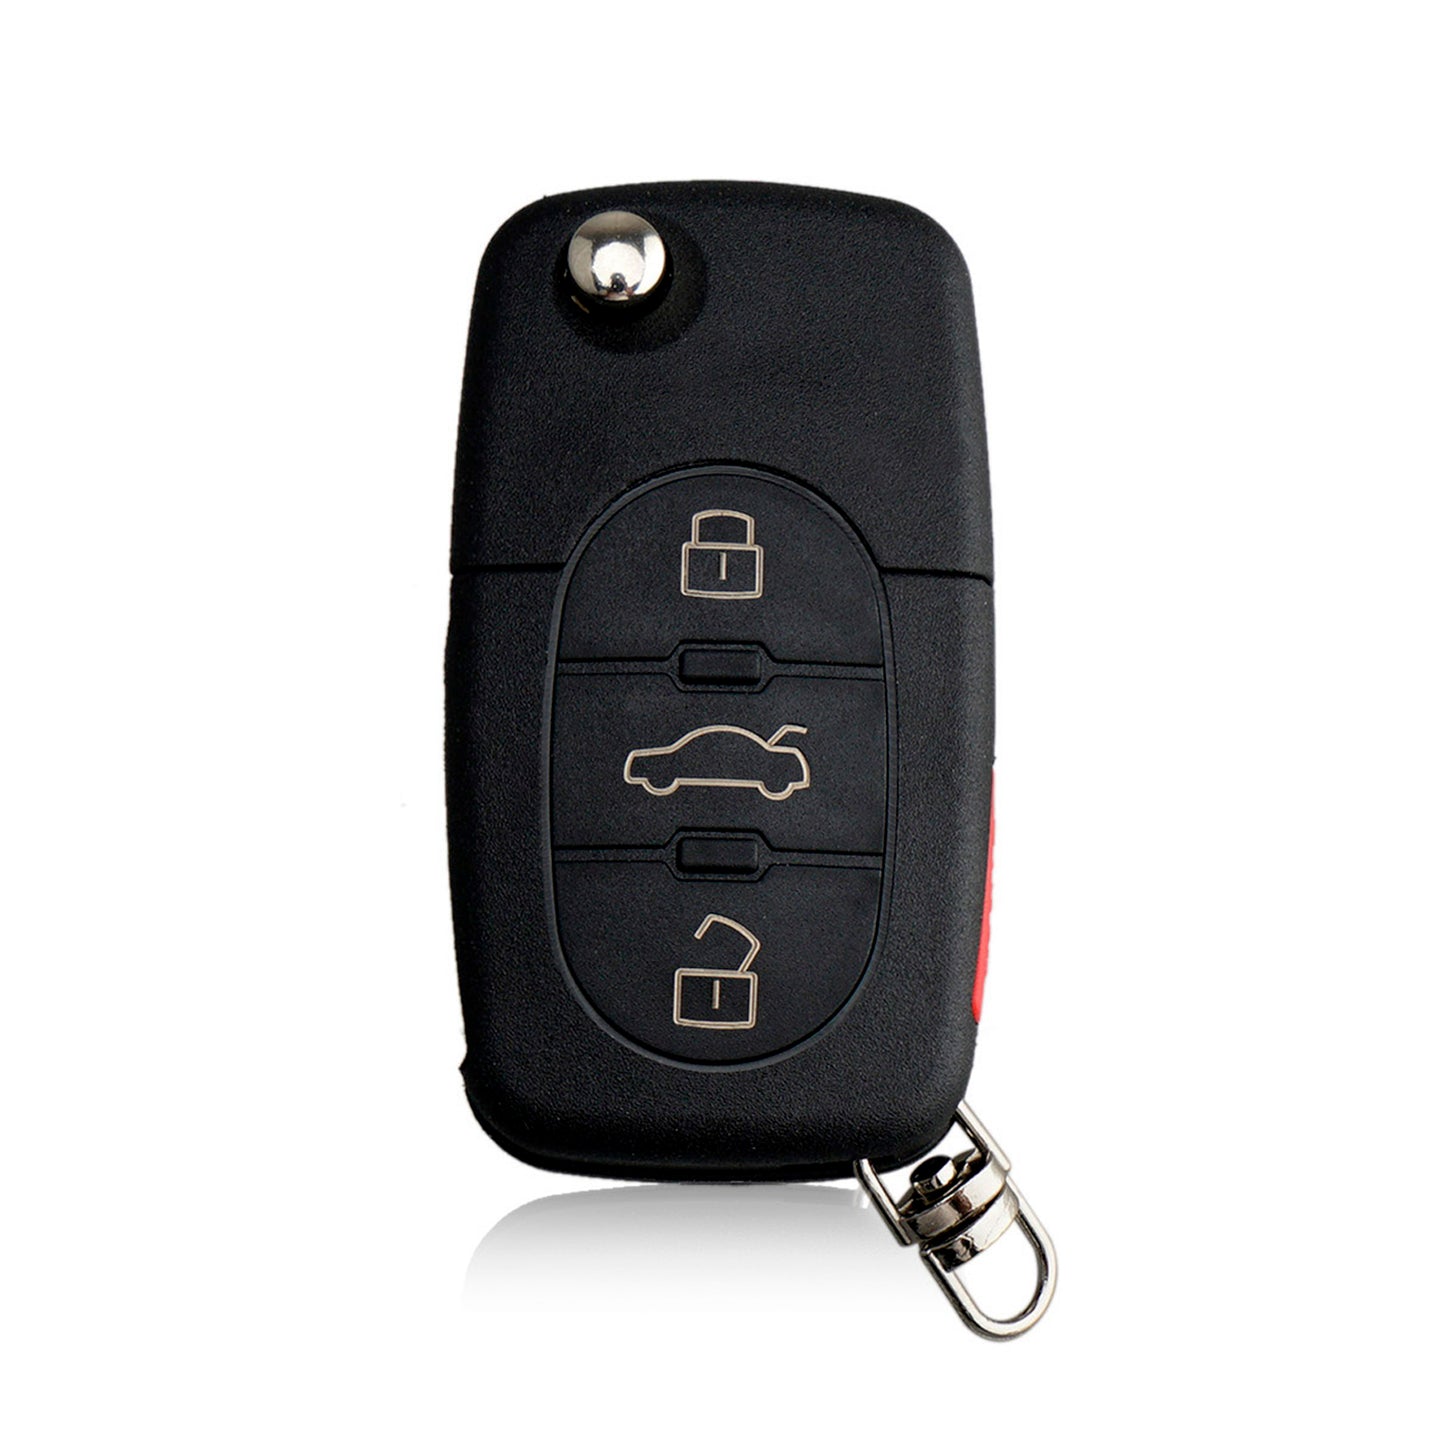 4 Buttons 315MHz Keyless Entry Fob Remote Car Key For 1997-2005 Audi A4 A6 A8 Allroad Quattro Cabriolet RS6 S4 S6 S8 TT Quattro FCC ID: MYT8Z0837231 SKU : J212